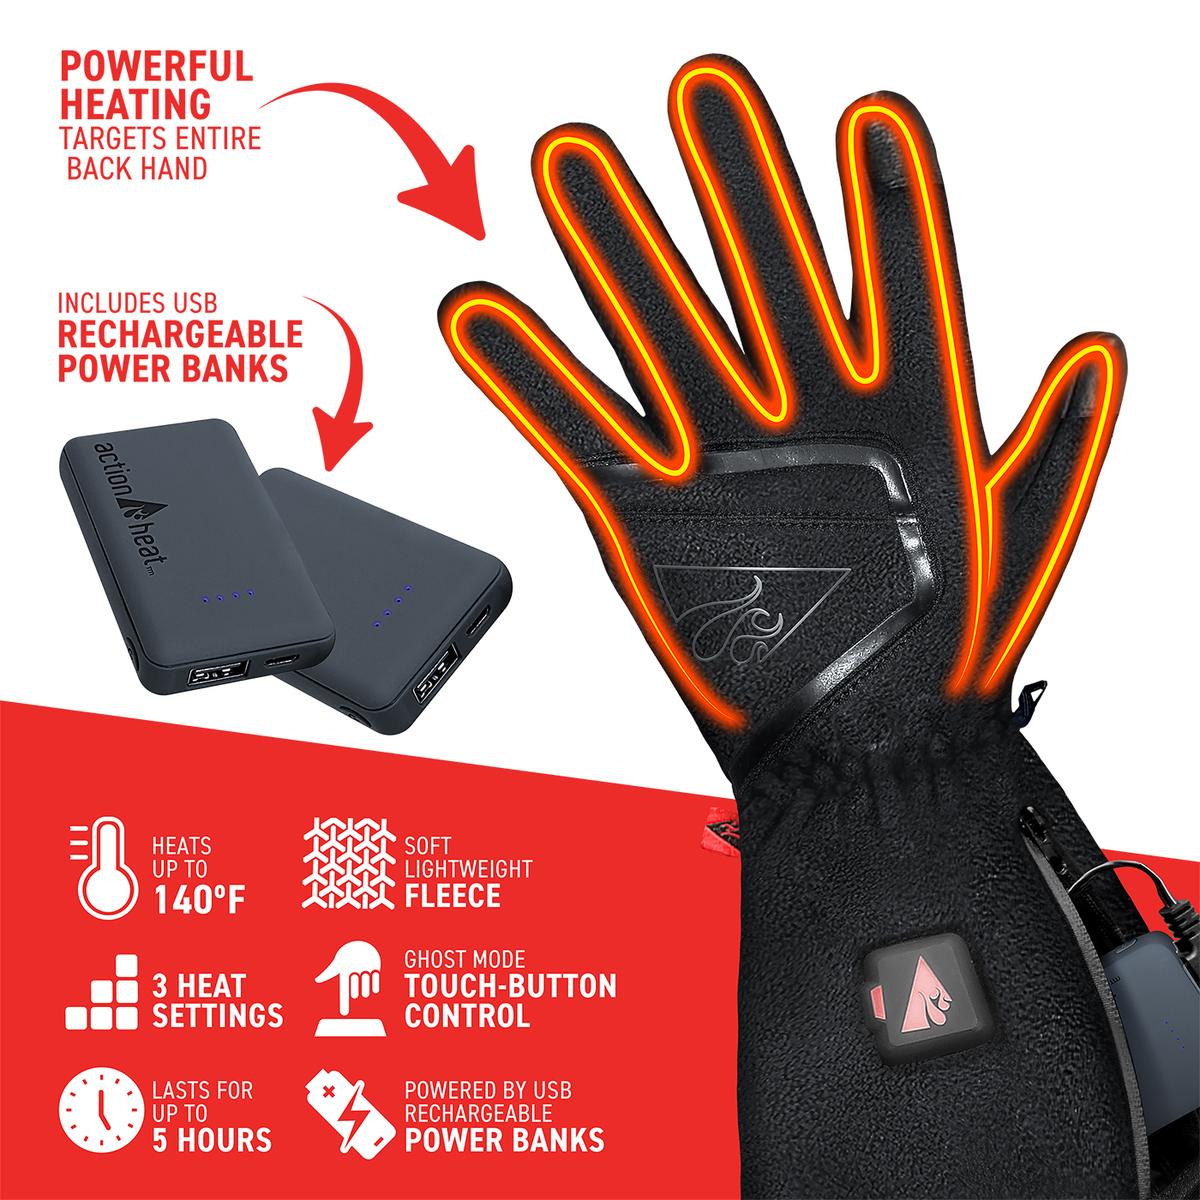 ActionHeat Women's 5V Battery Heated Premium Gloves - Black